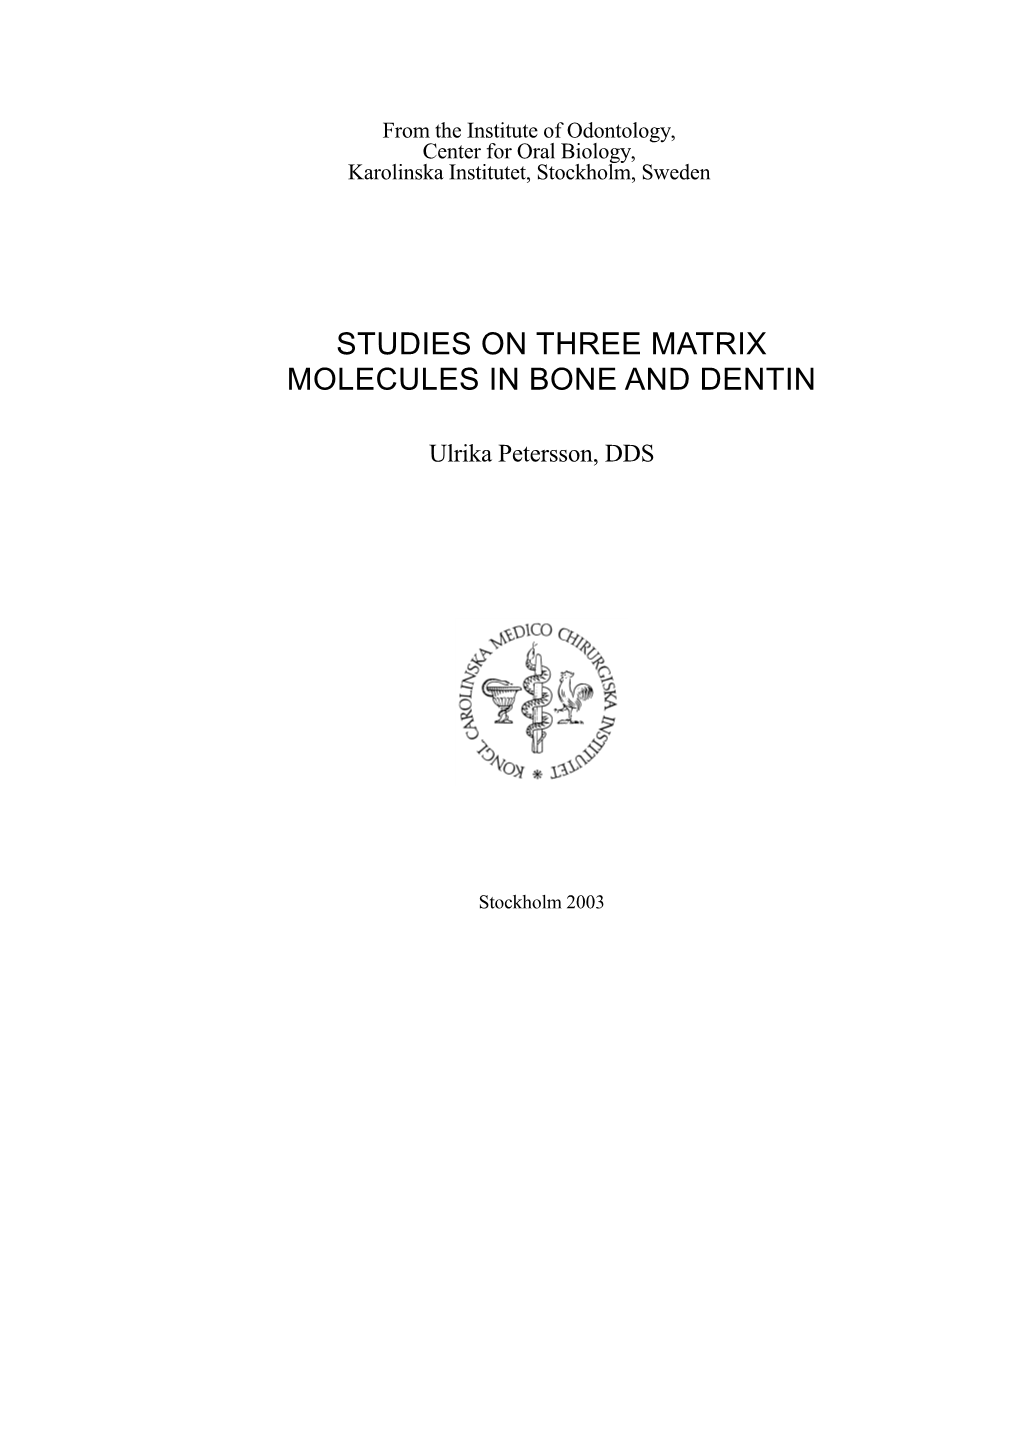 Studies on Three Matrix Molecules in Bone and Dentin